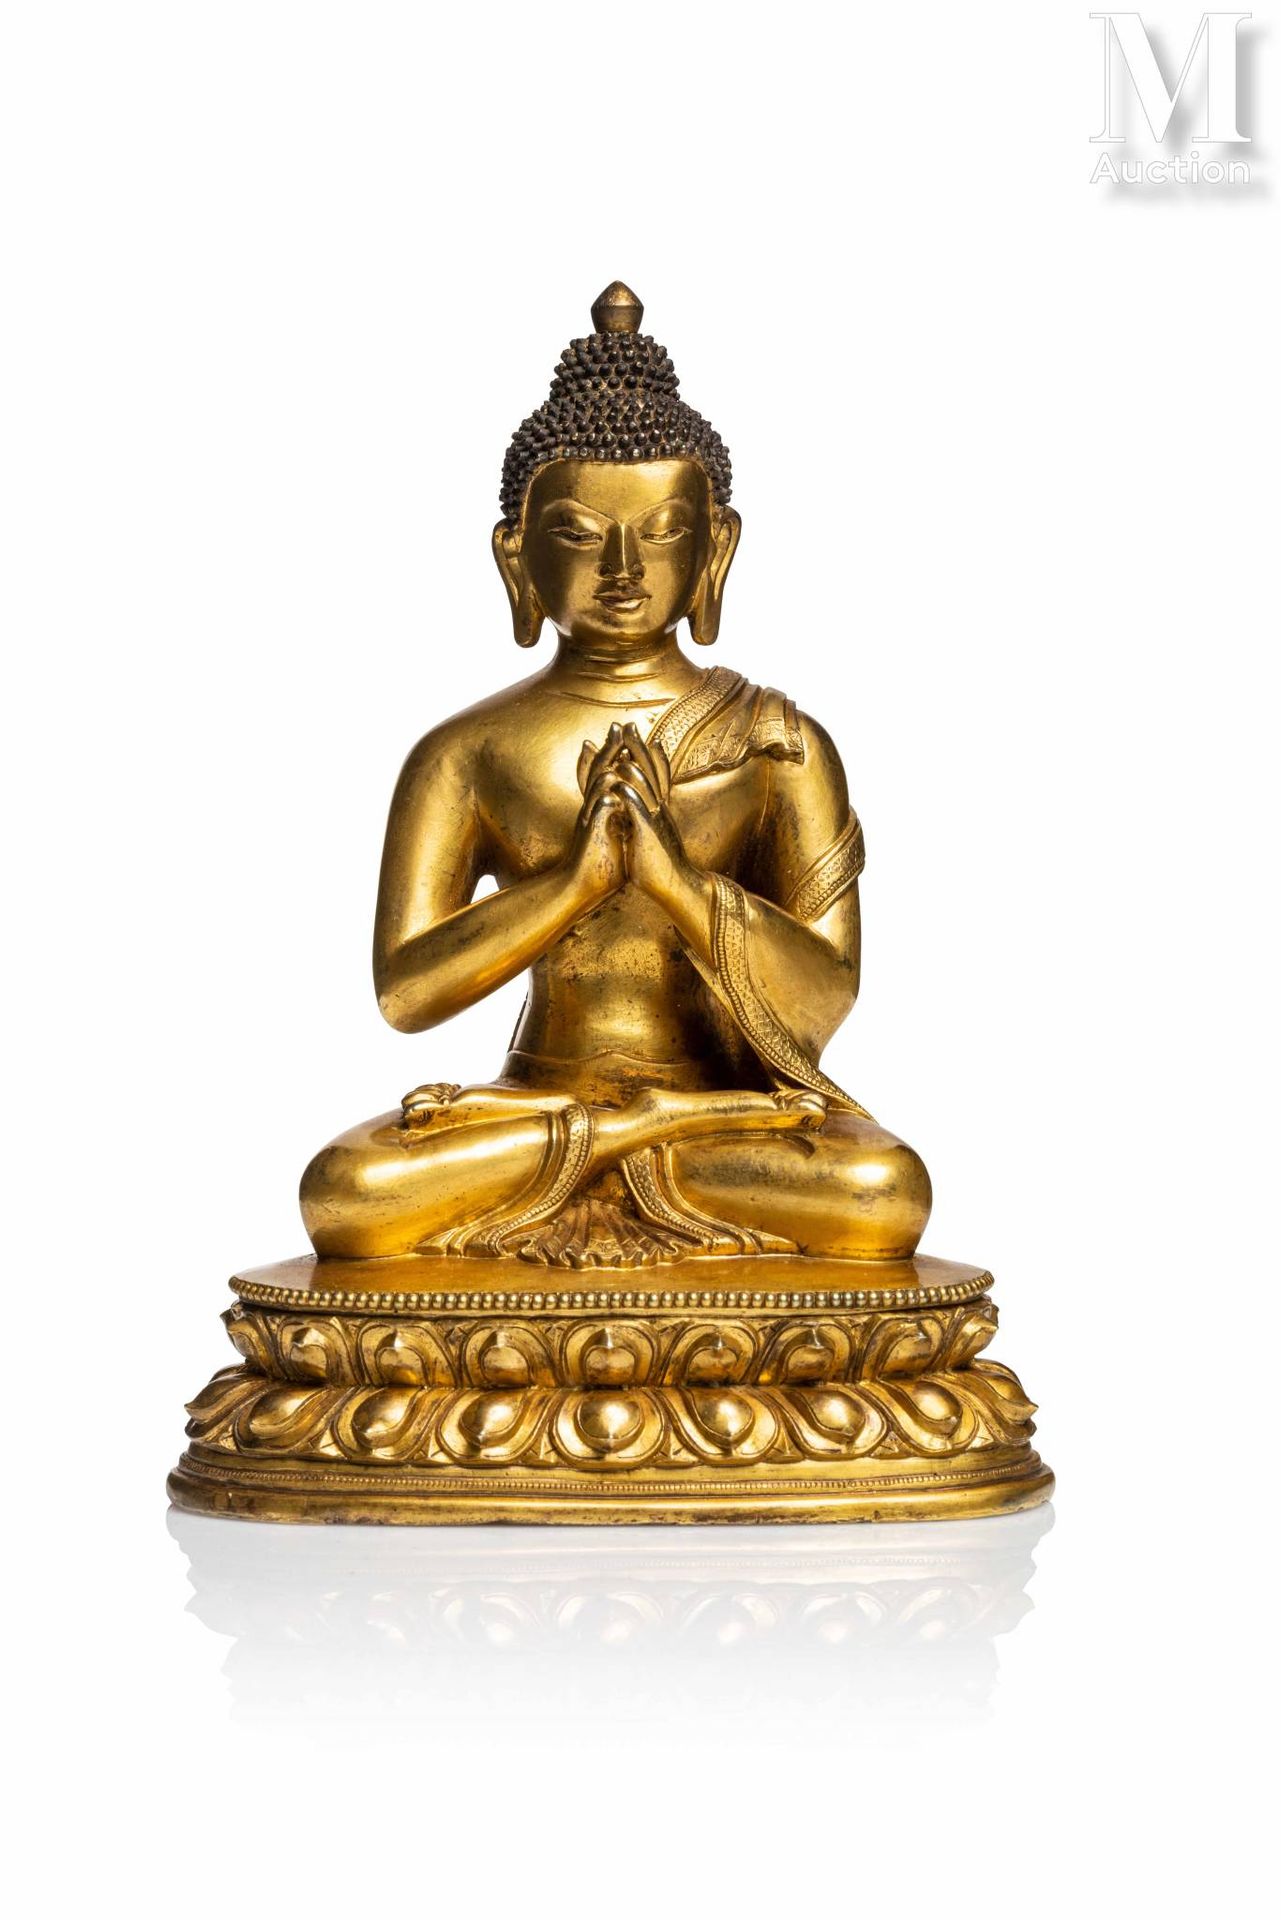 CHINE, XVIIIe siècle Estatua de bronce dorado

Representa al Buda Shakyamuni sen&hellip;